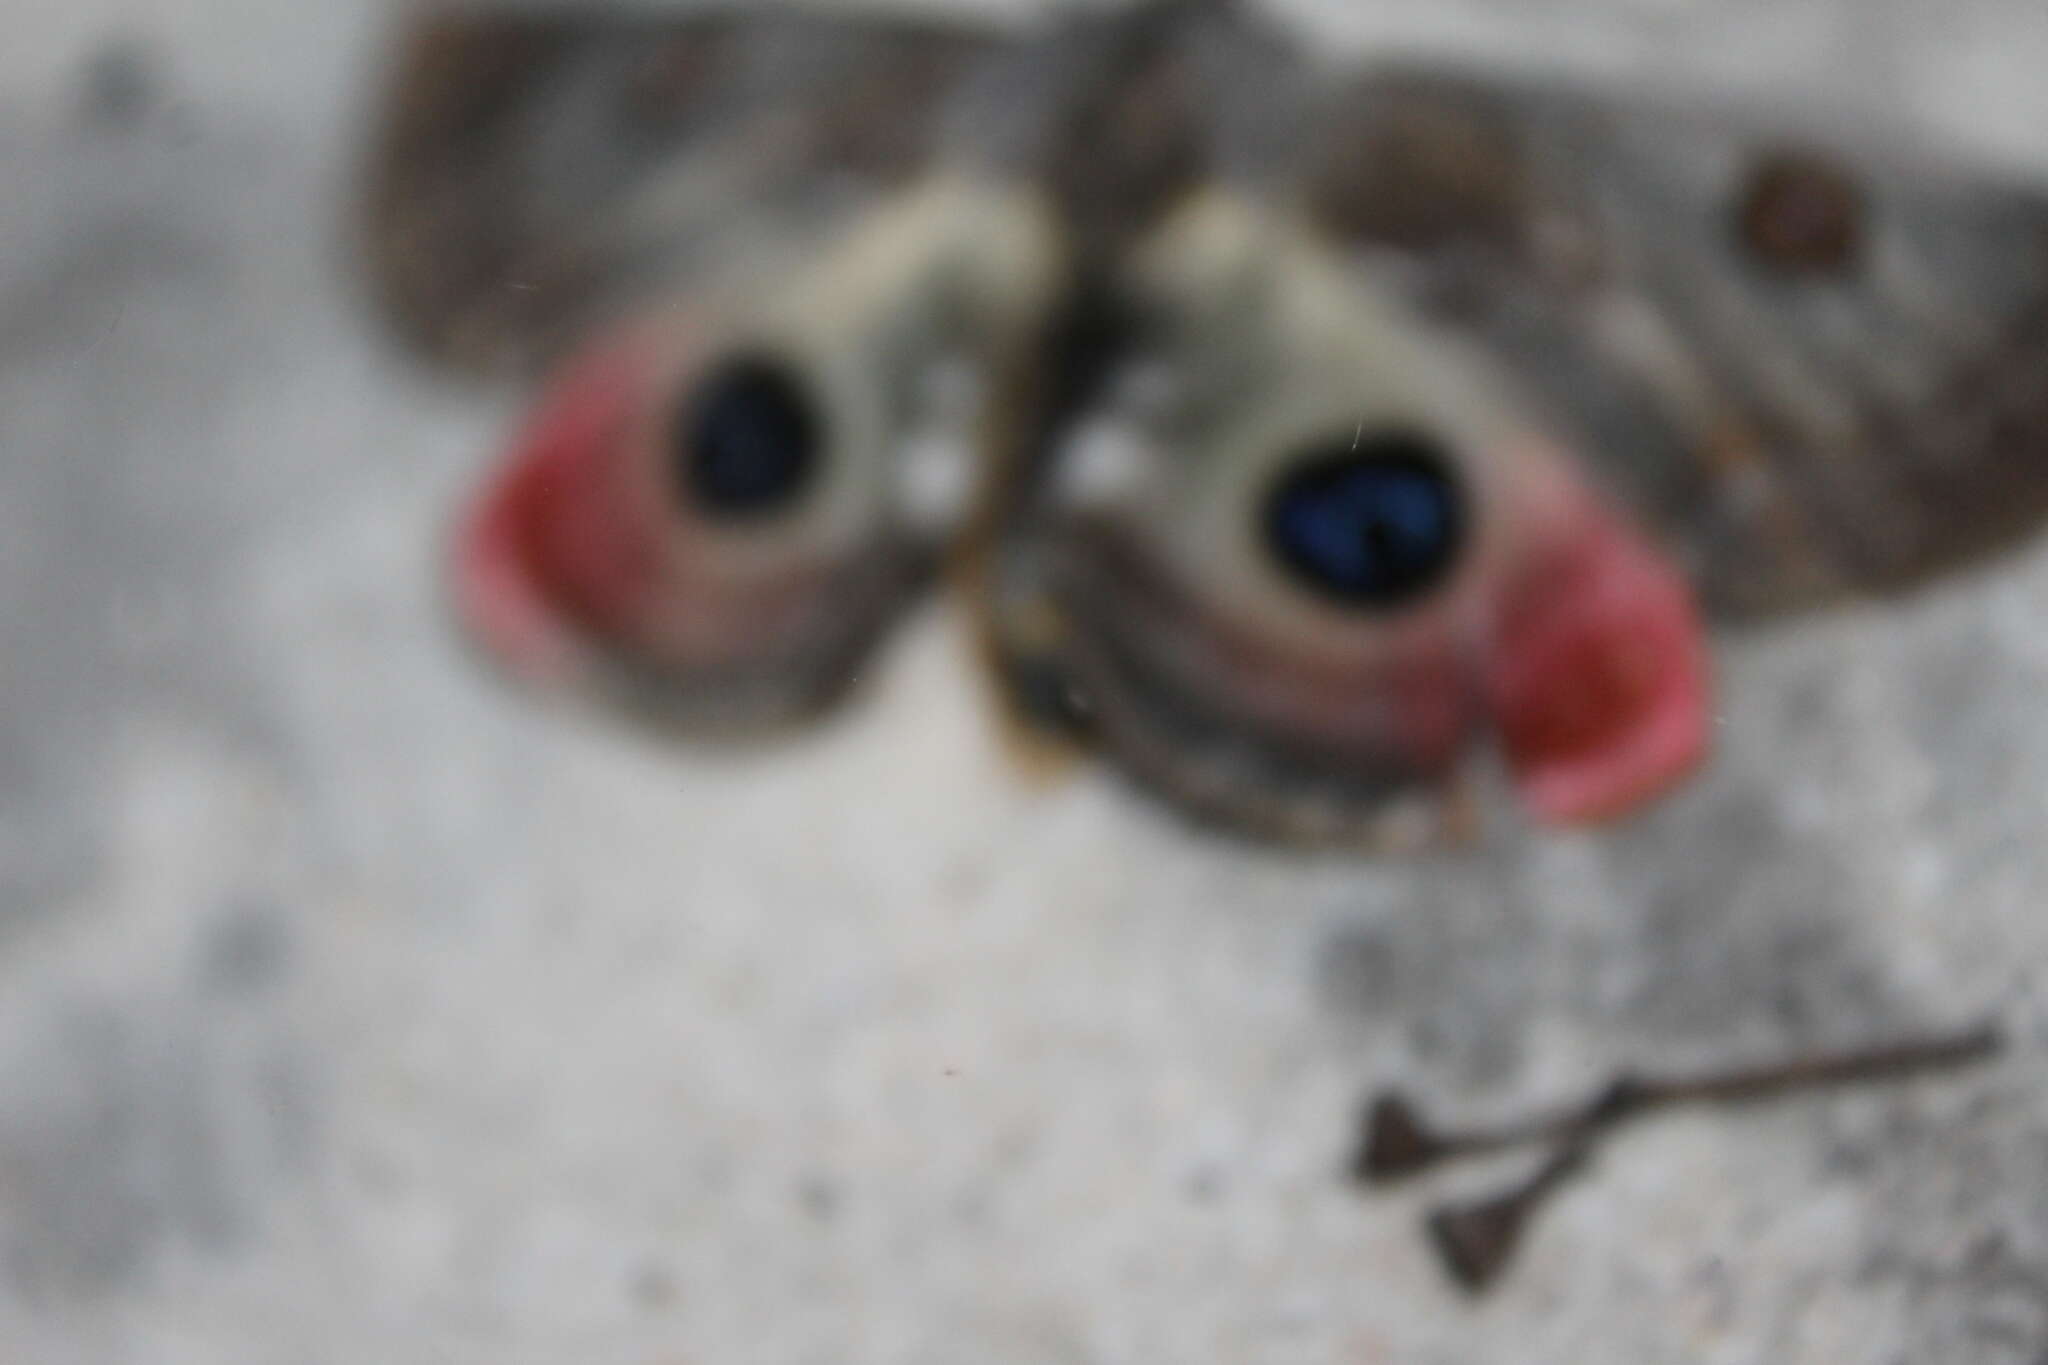 Image of Australian silkworm moths